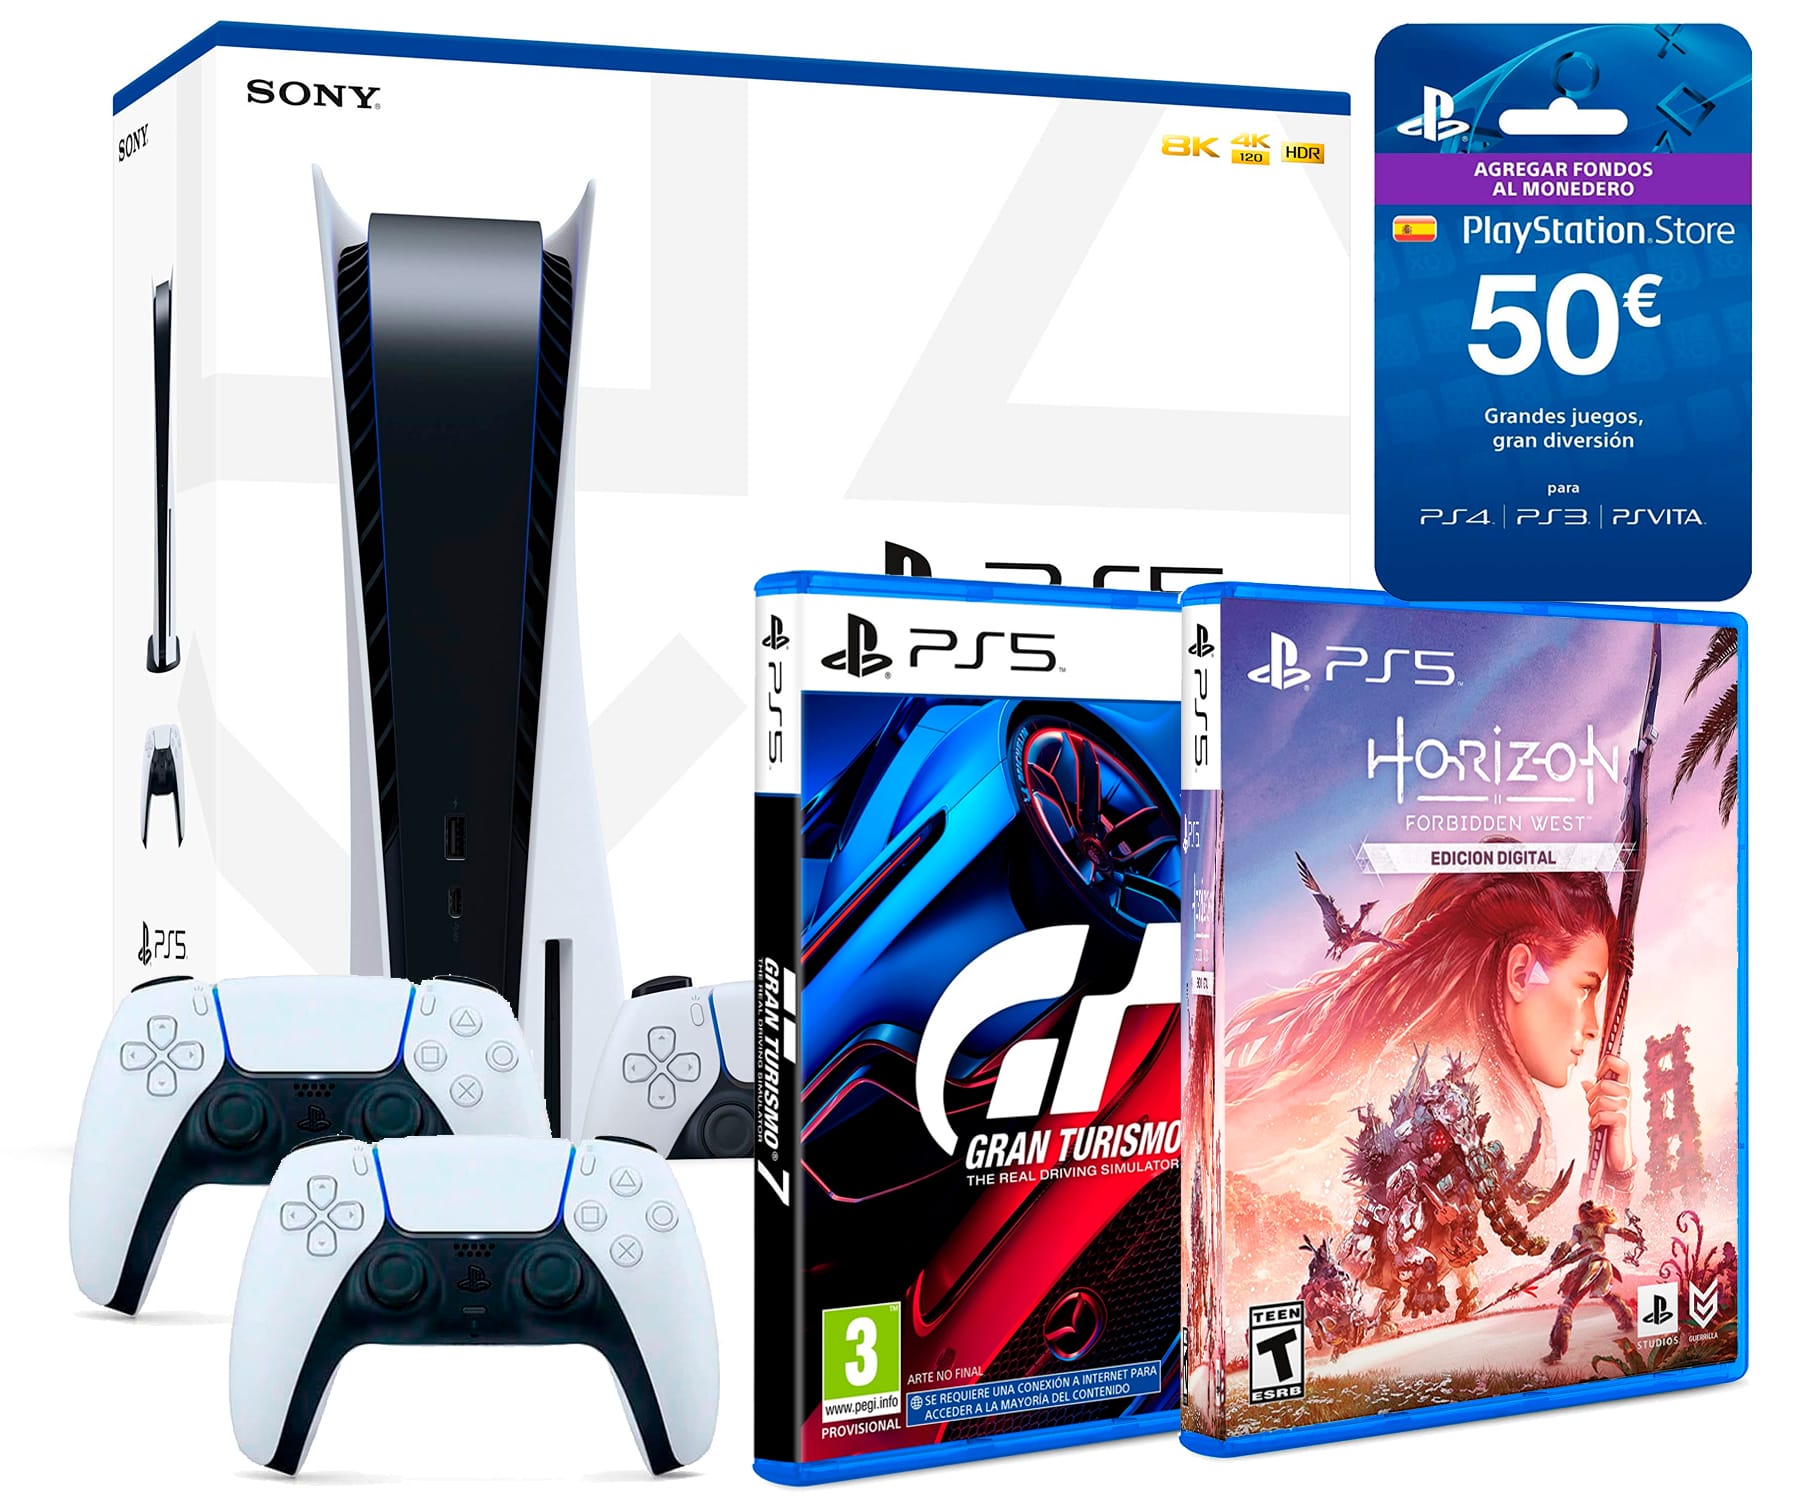 SONY PACK PlayStation 5 Edición Bluray + Horizon II: Forbidden West (Digital) + Gran Turismo 7 + PSLive 50€ + DualSense